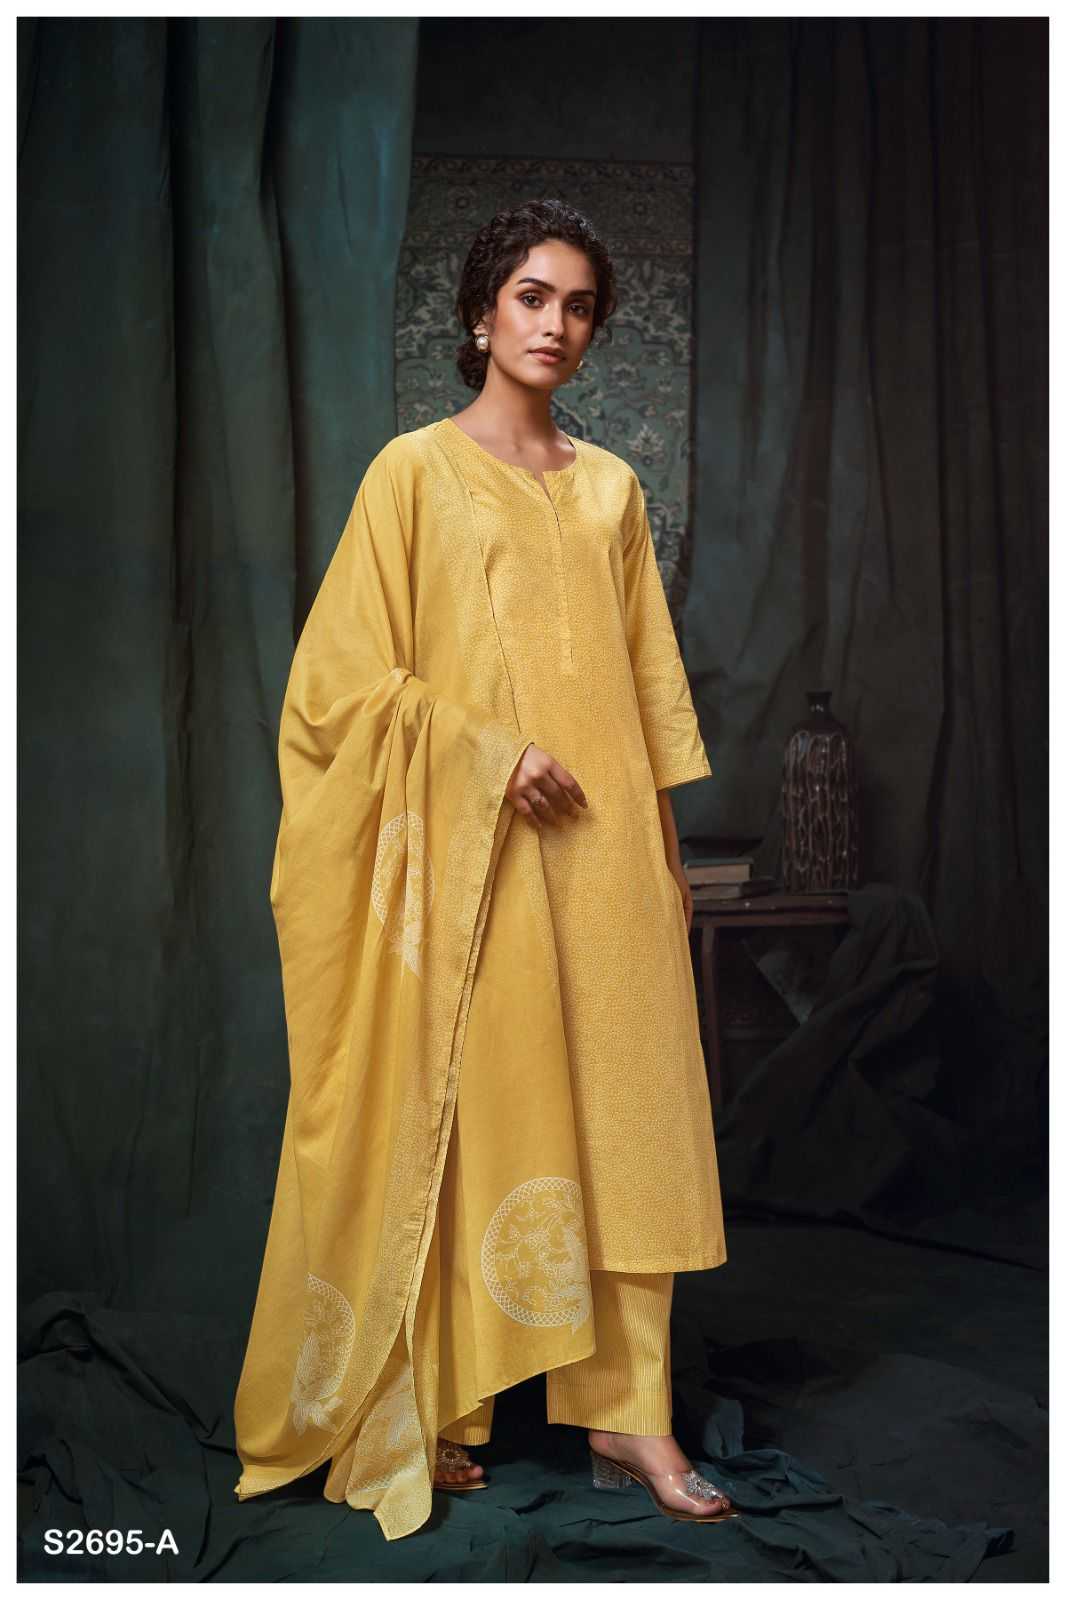 Ganga AMYRA 2695 Dress Materials Wholesale catalog